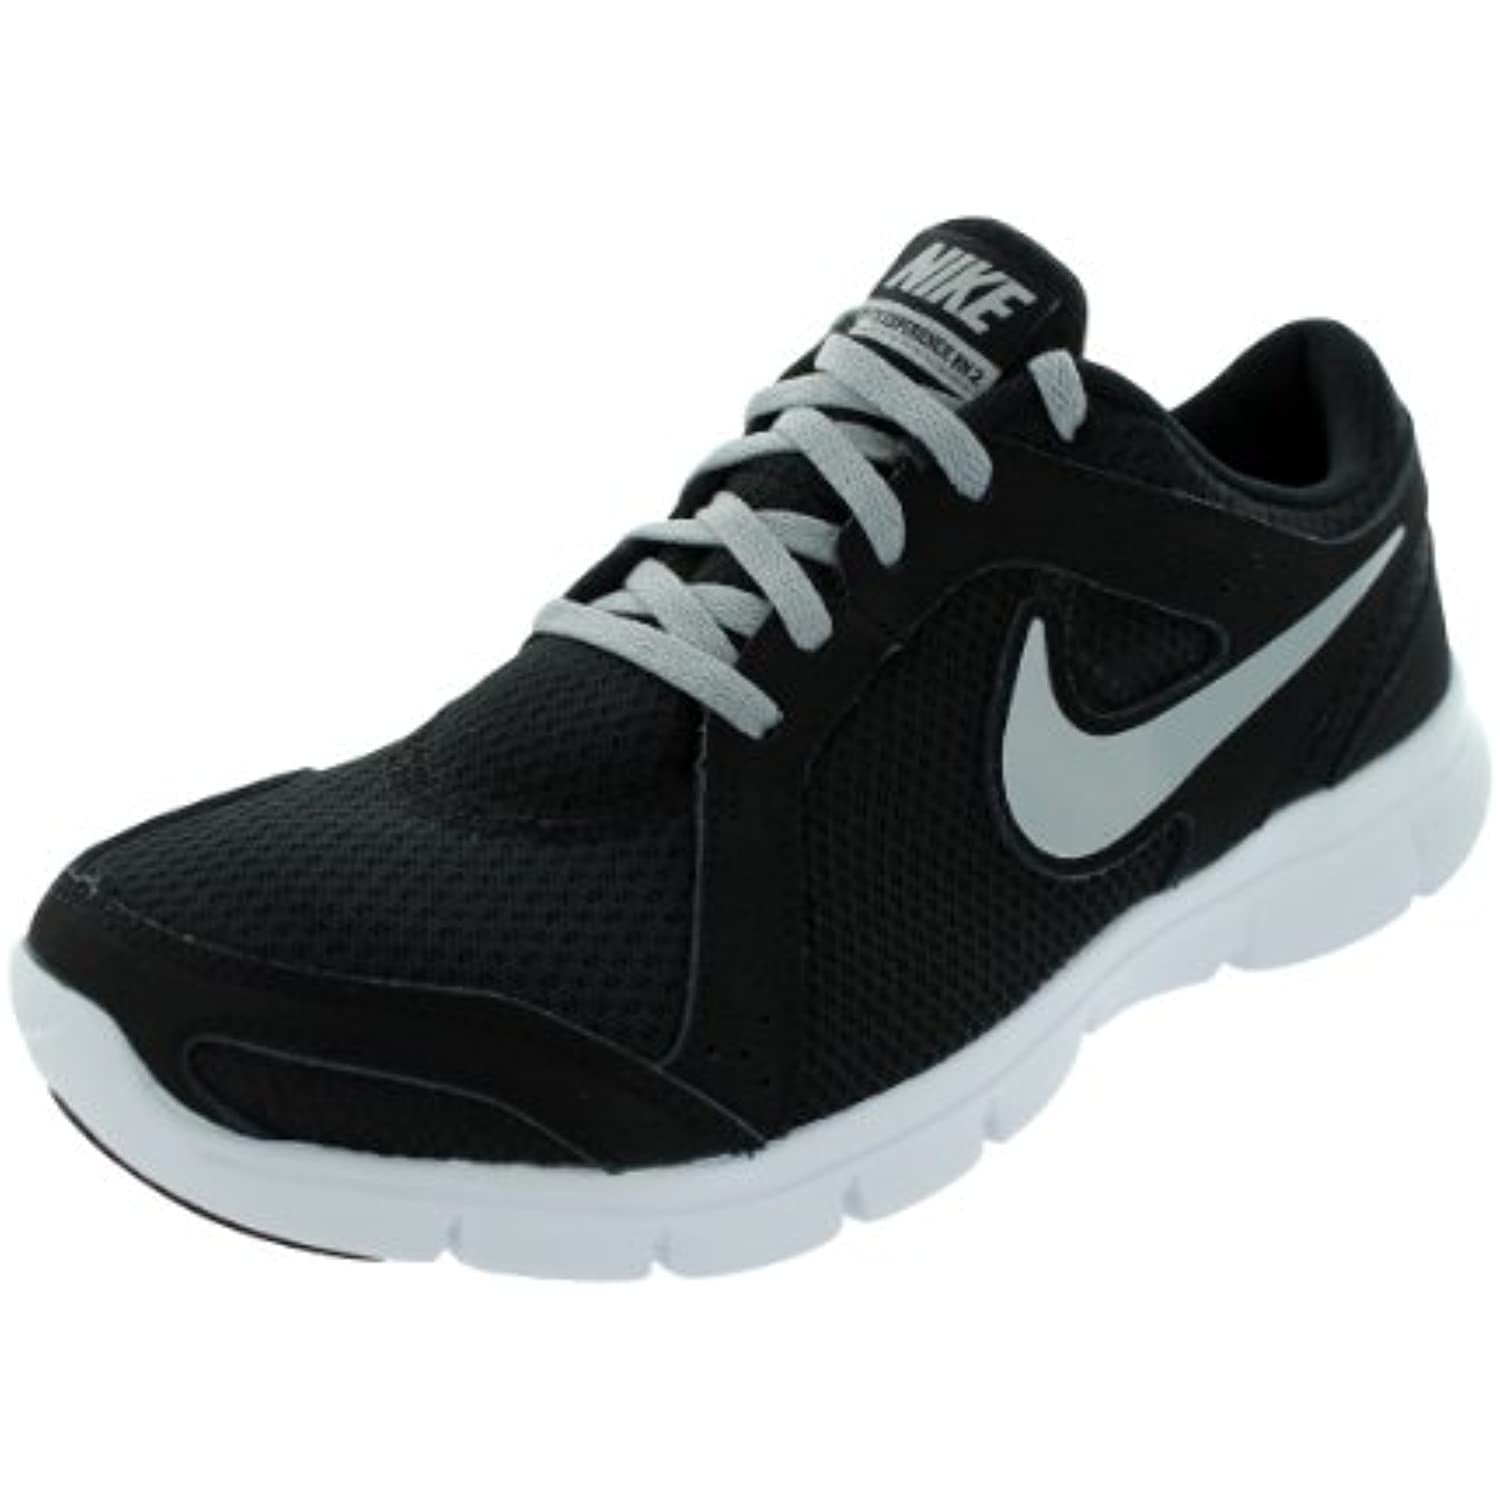 Nike Experience RN 2 Black/Mtllc Slvr/Wlf Gry/White Running Shoes 7 Women US - Walmart.com